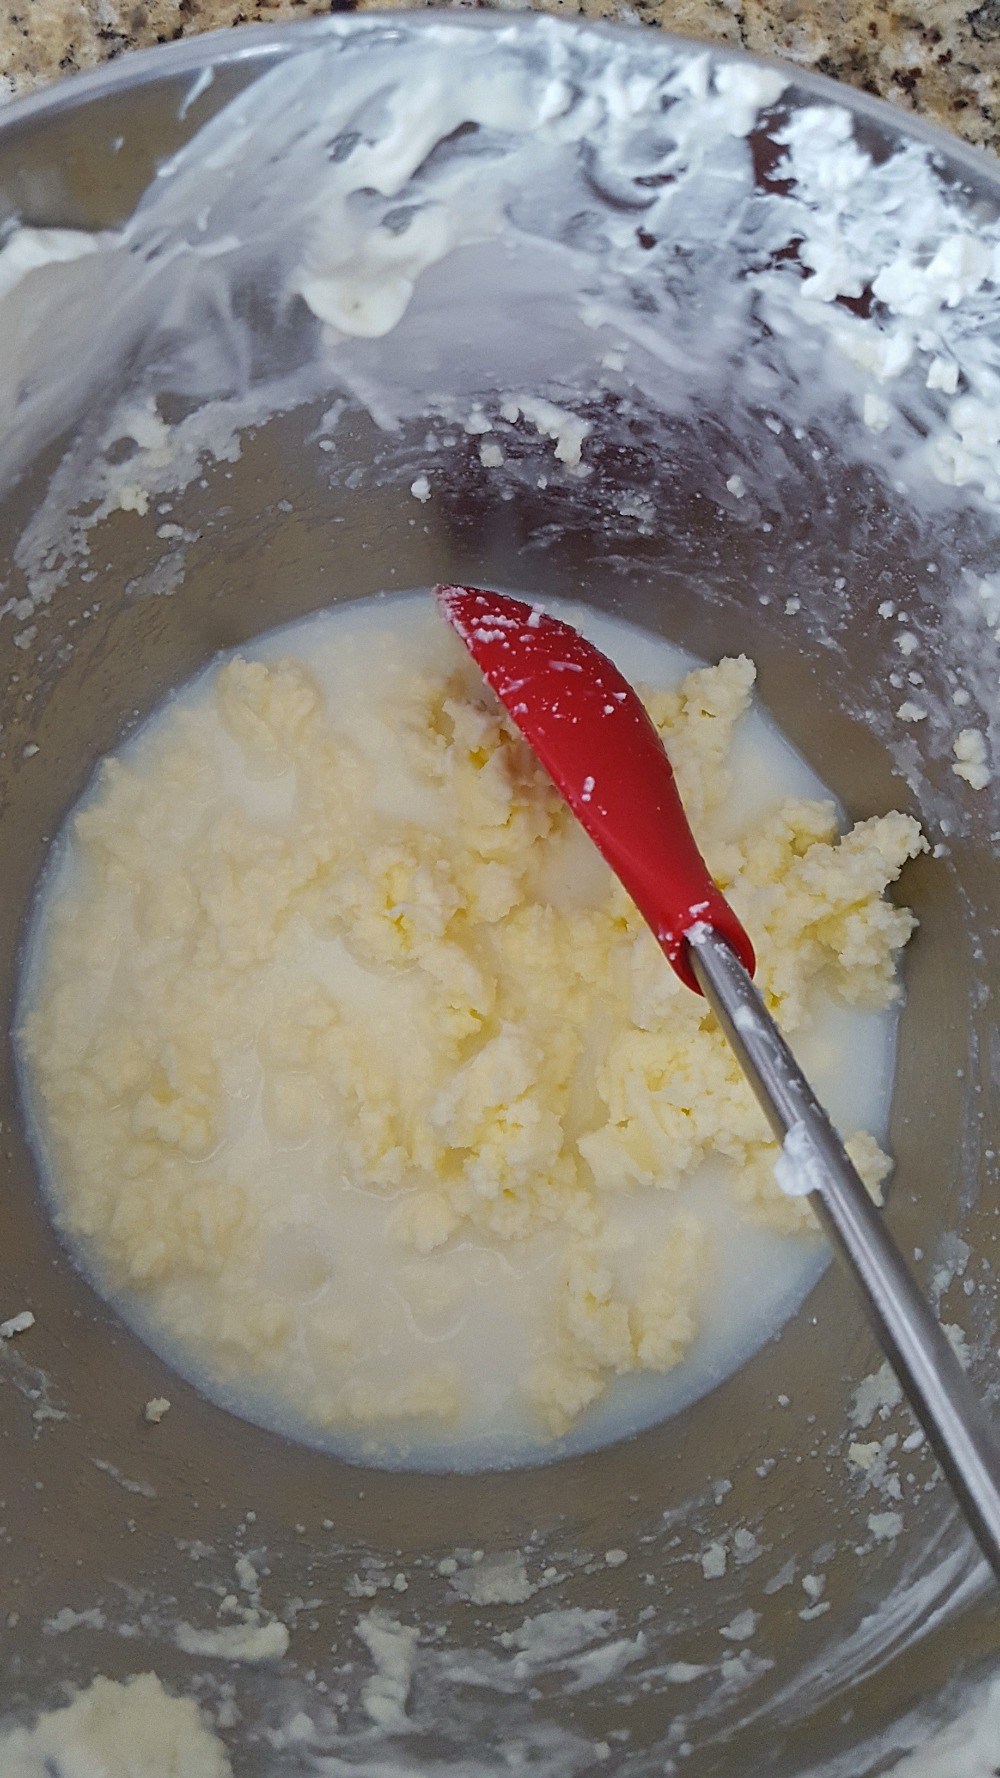 Churn the cream until buttermilk seperates